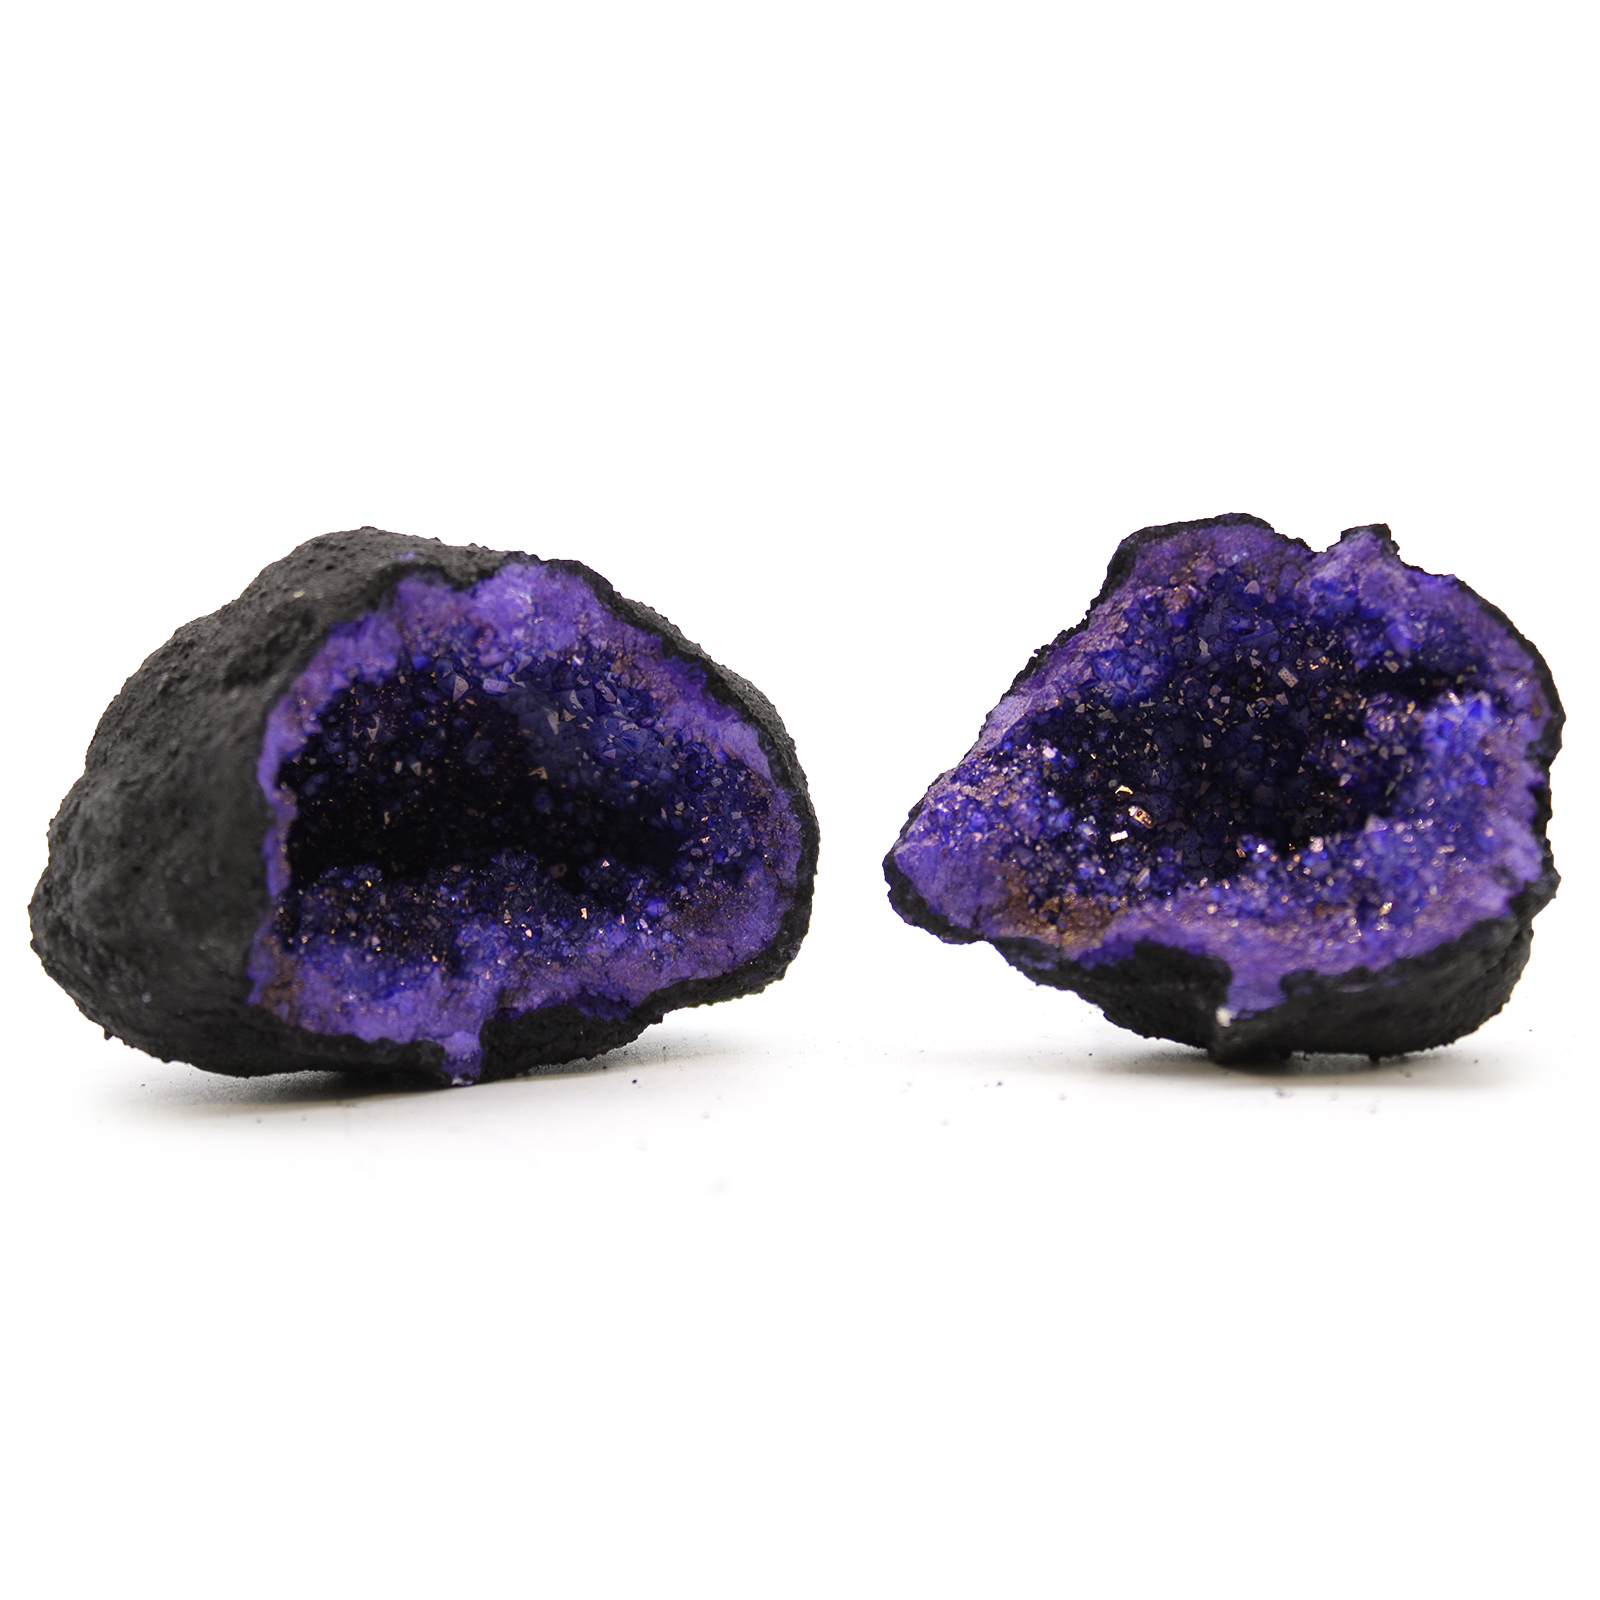 Coloured Calcite Geodes - Black Rock - Turquoise / Purple